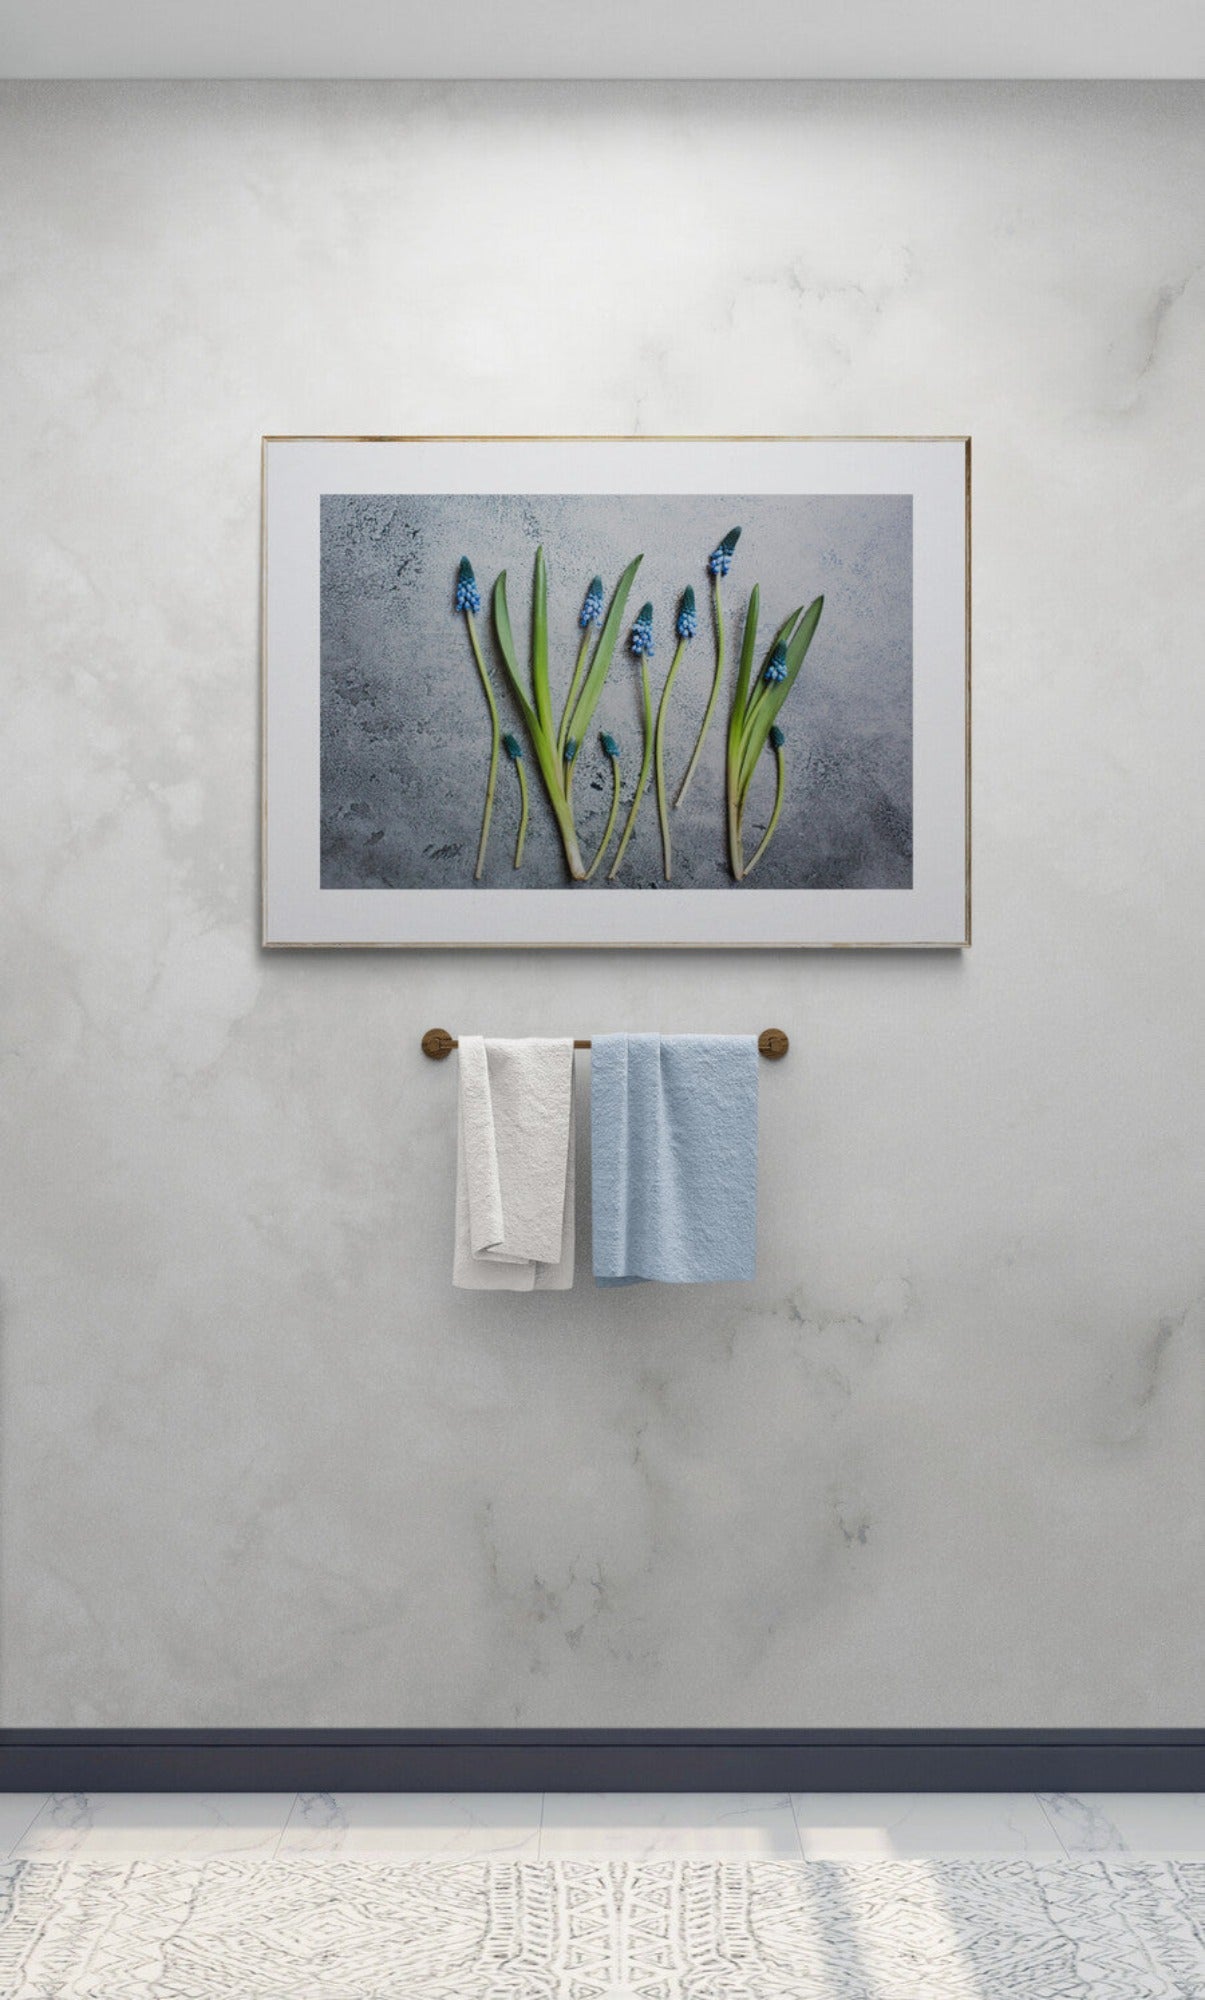 Blue flowers photograph as wall art in a bathroom